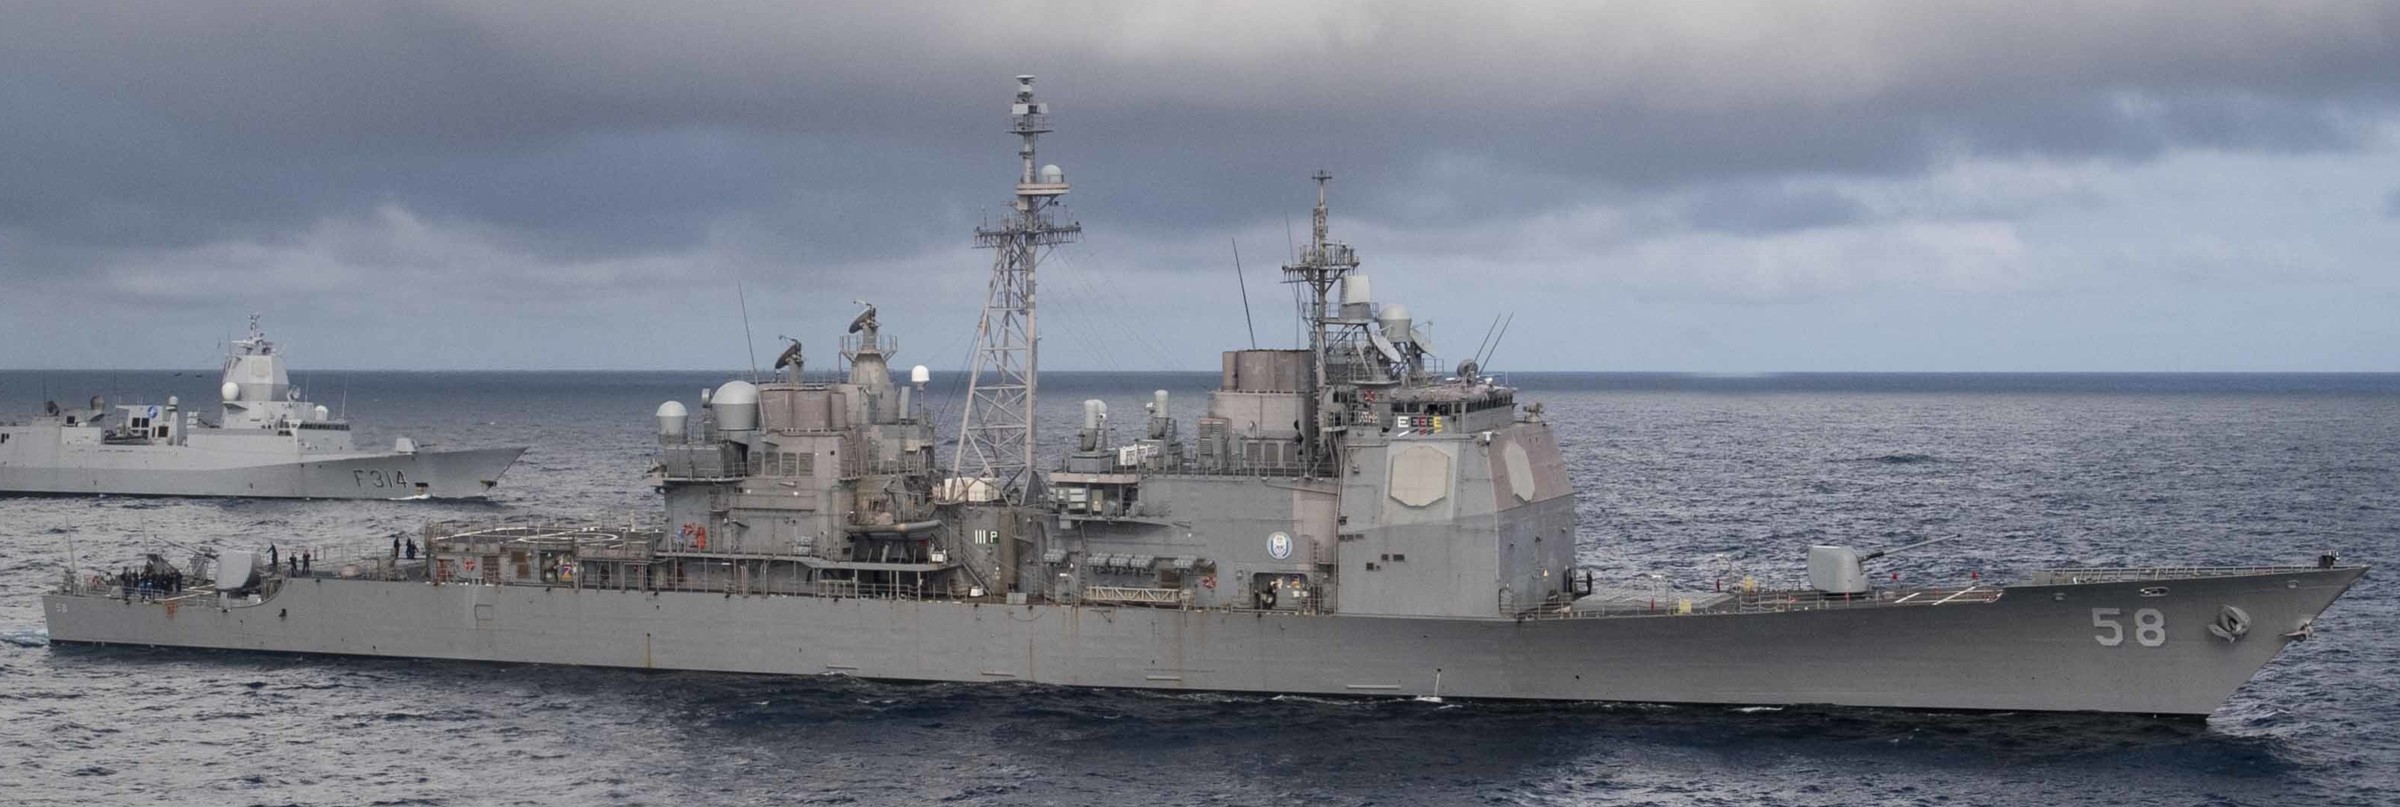 cg-58 uss philippine sea ticonderoga class guided missile cruiser aegis us navy 56